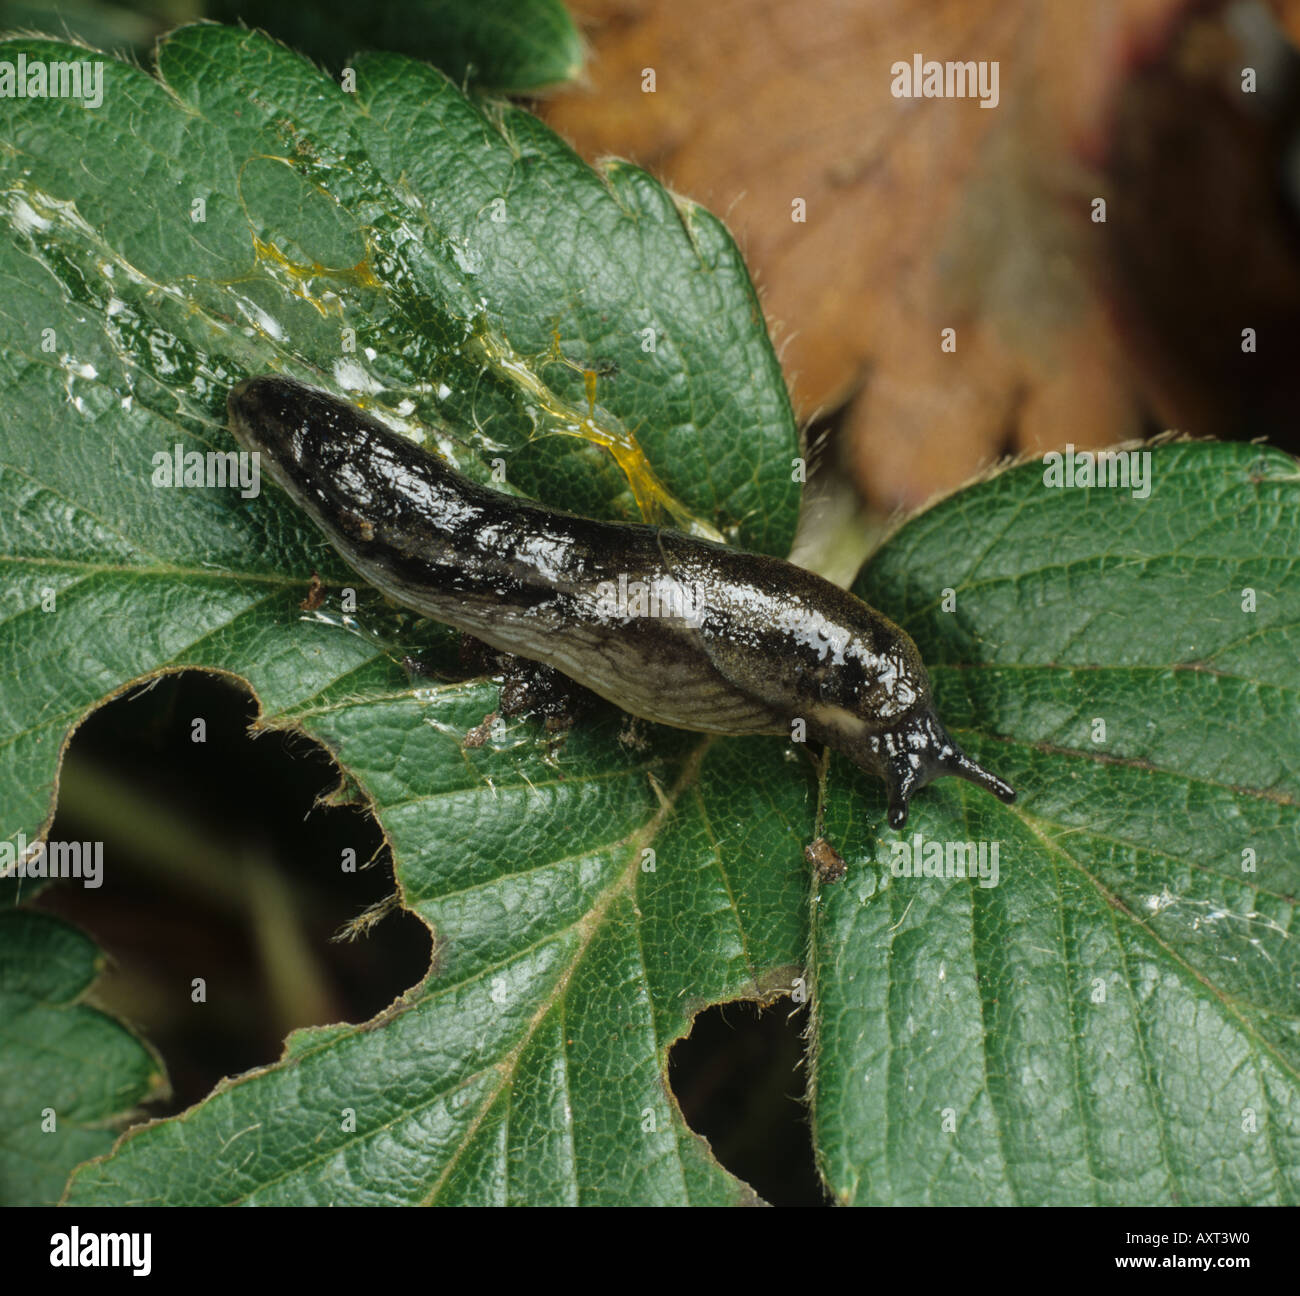 Giardino slug Arion hortensis su una foglia di fragola Foto Stock